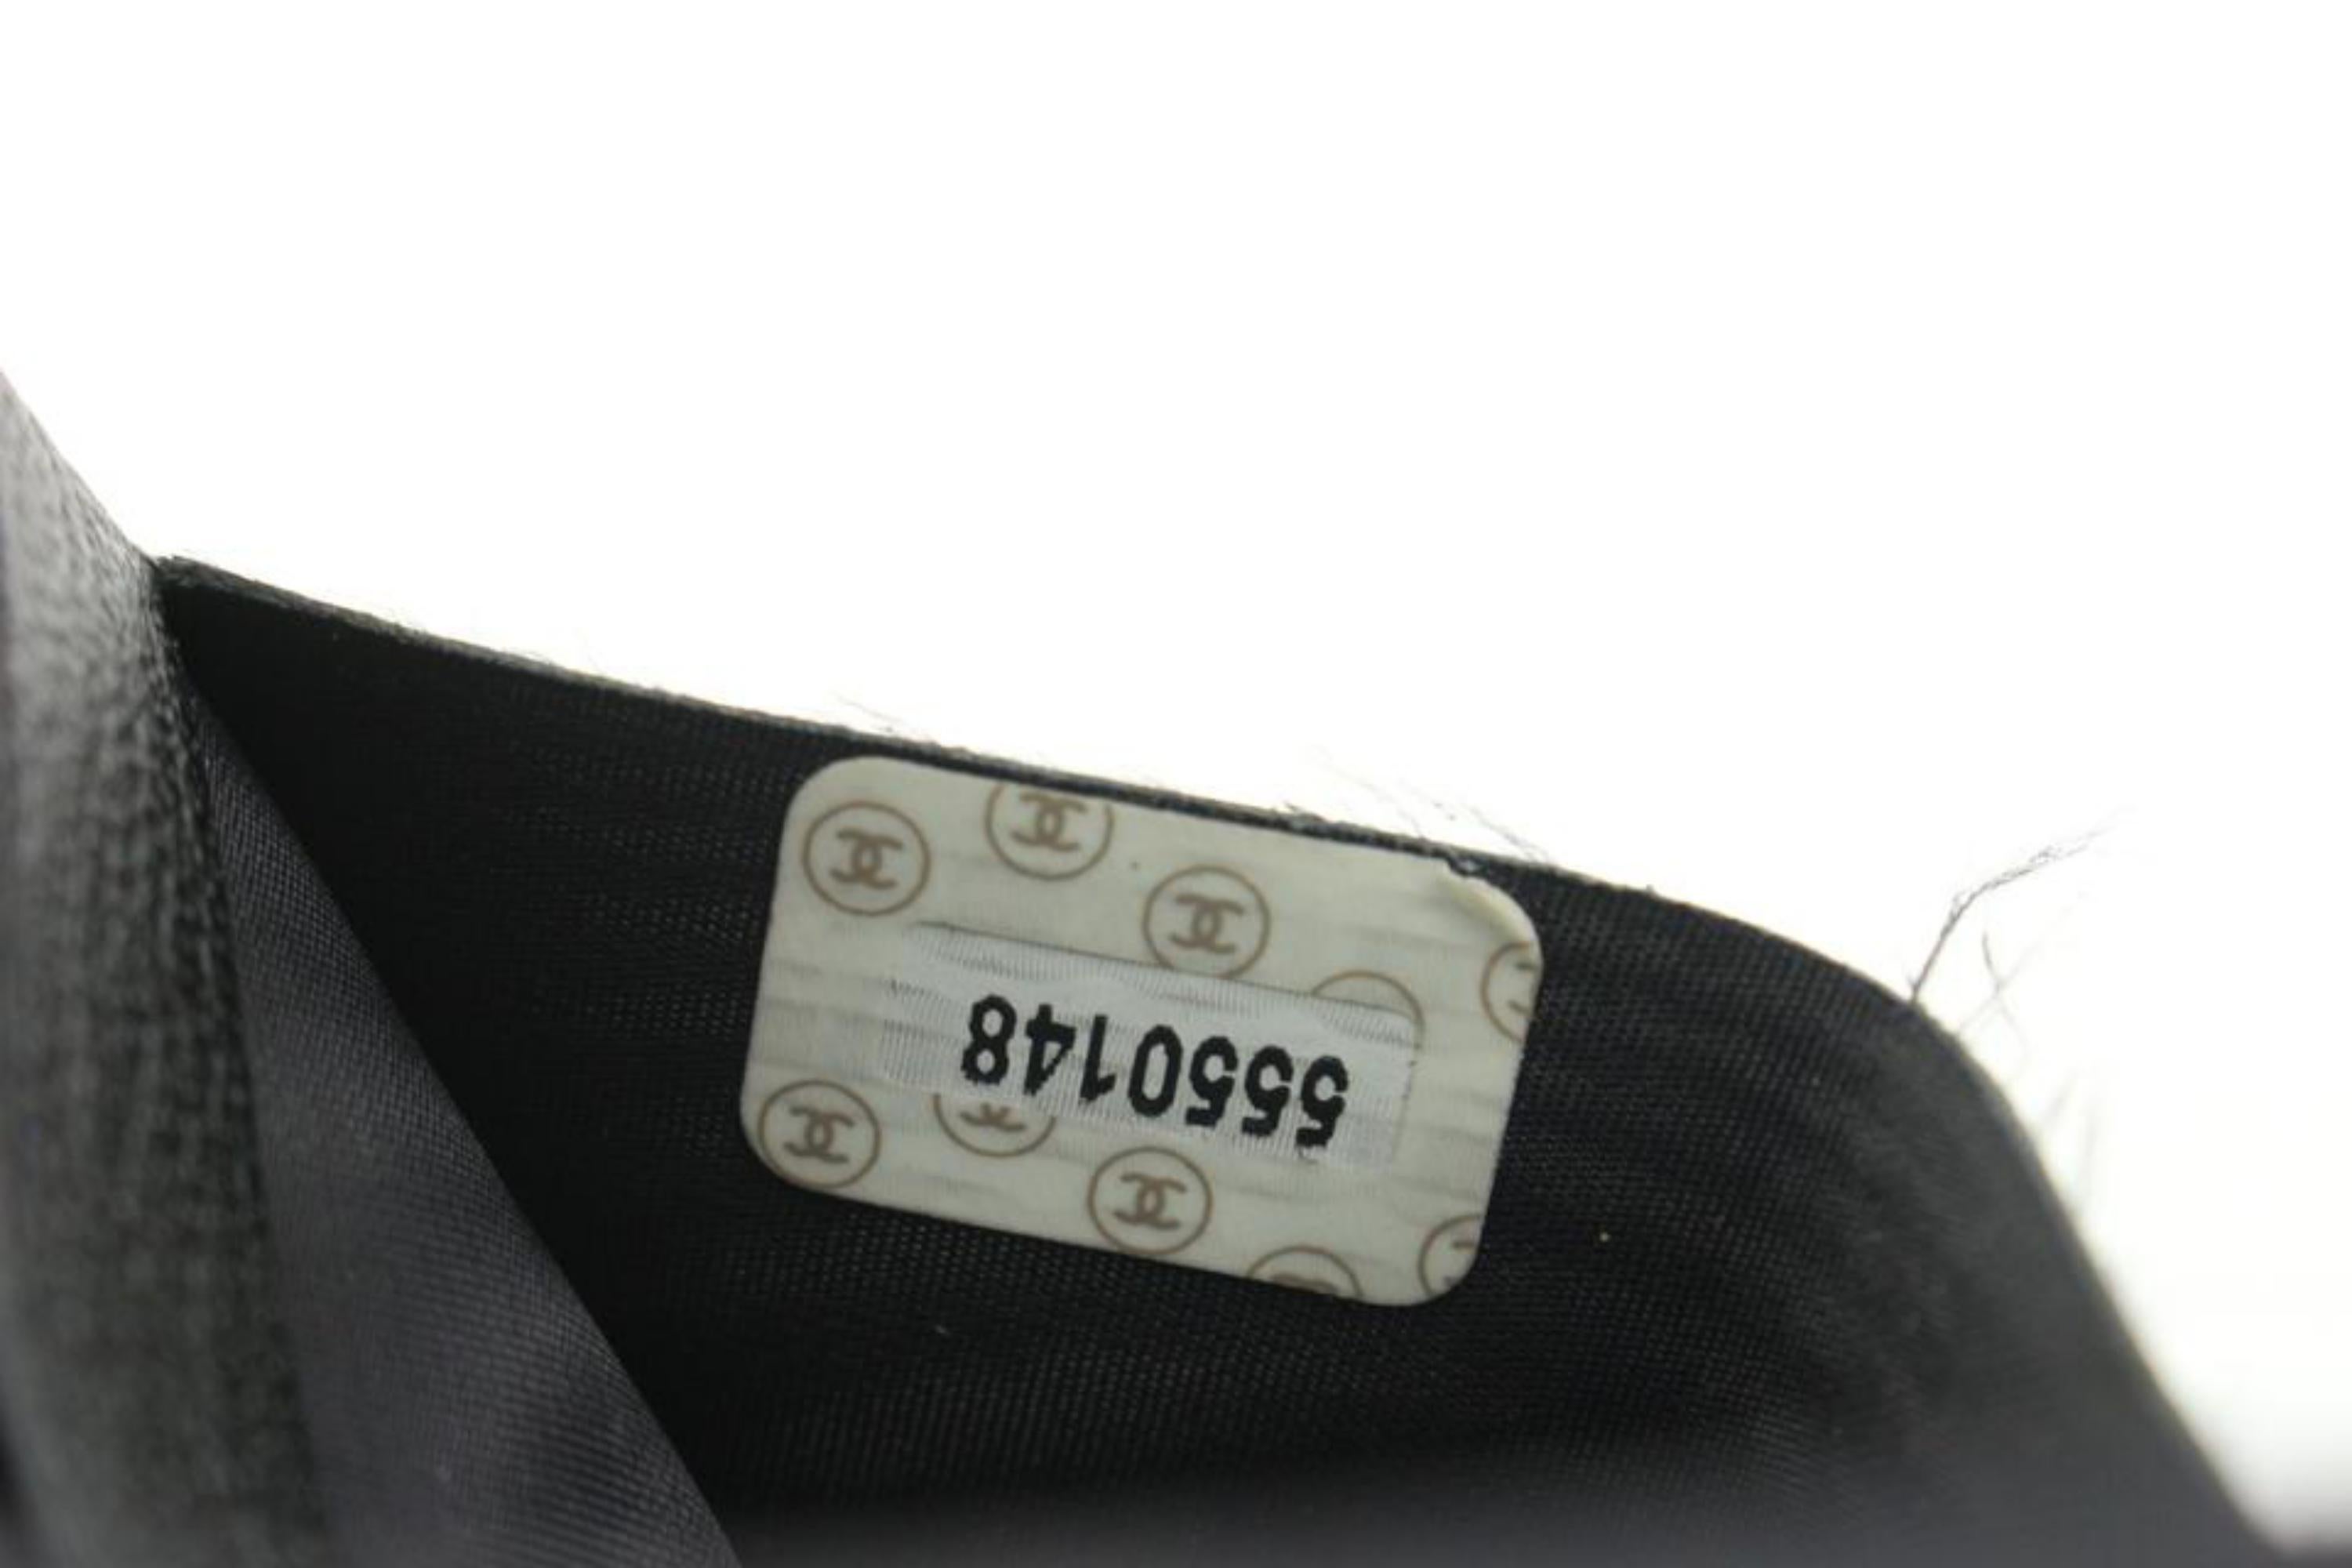 Chanel Black Calfskin Leather CC Card Holder Wallet Case 64ck225s 8